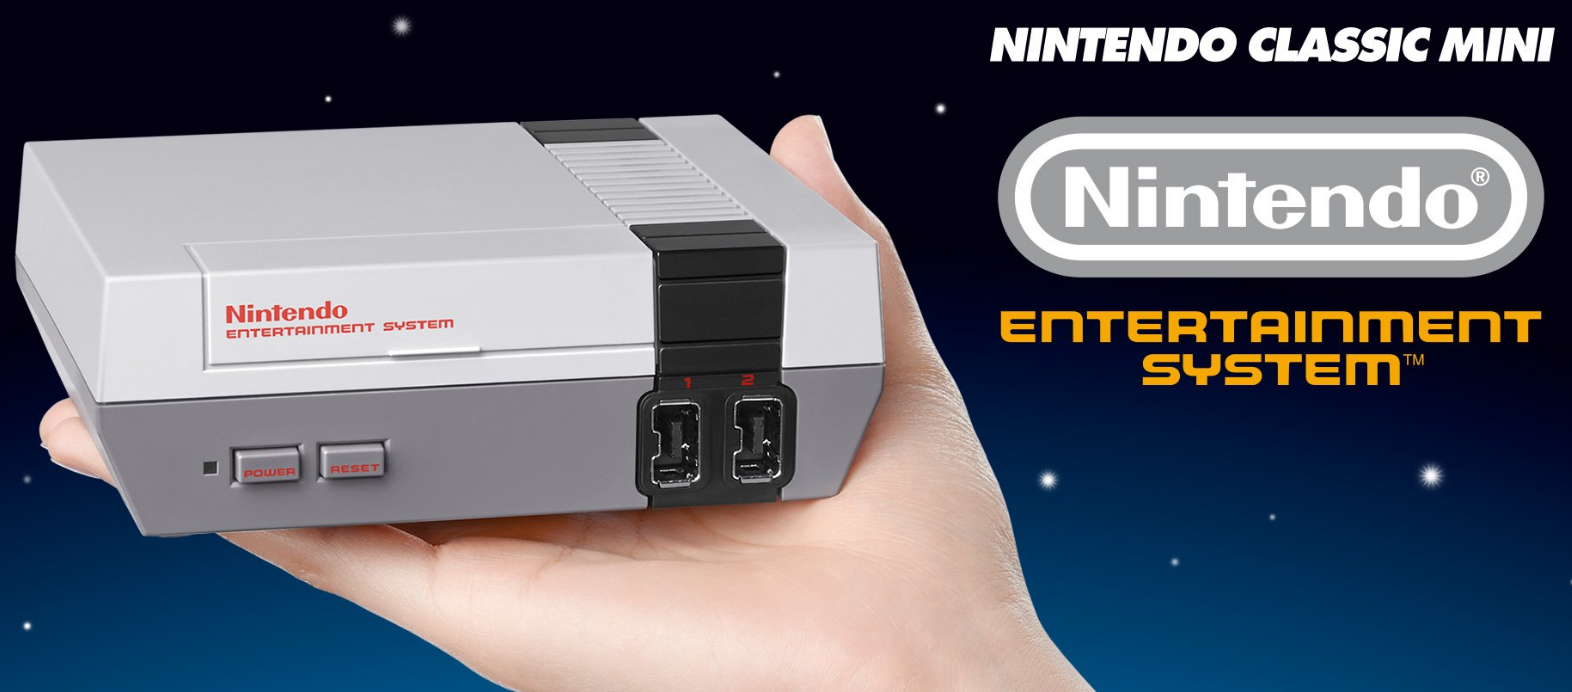 Nintendo Classic Mini NES Launching In November